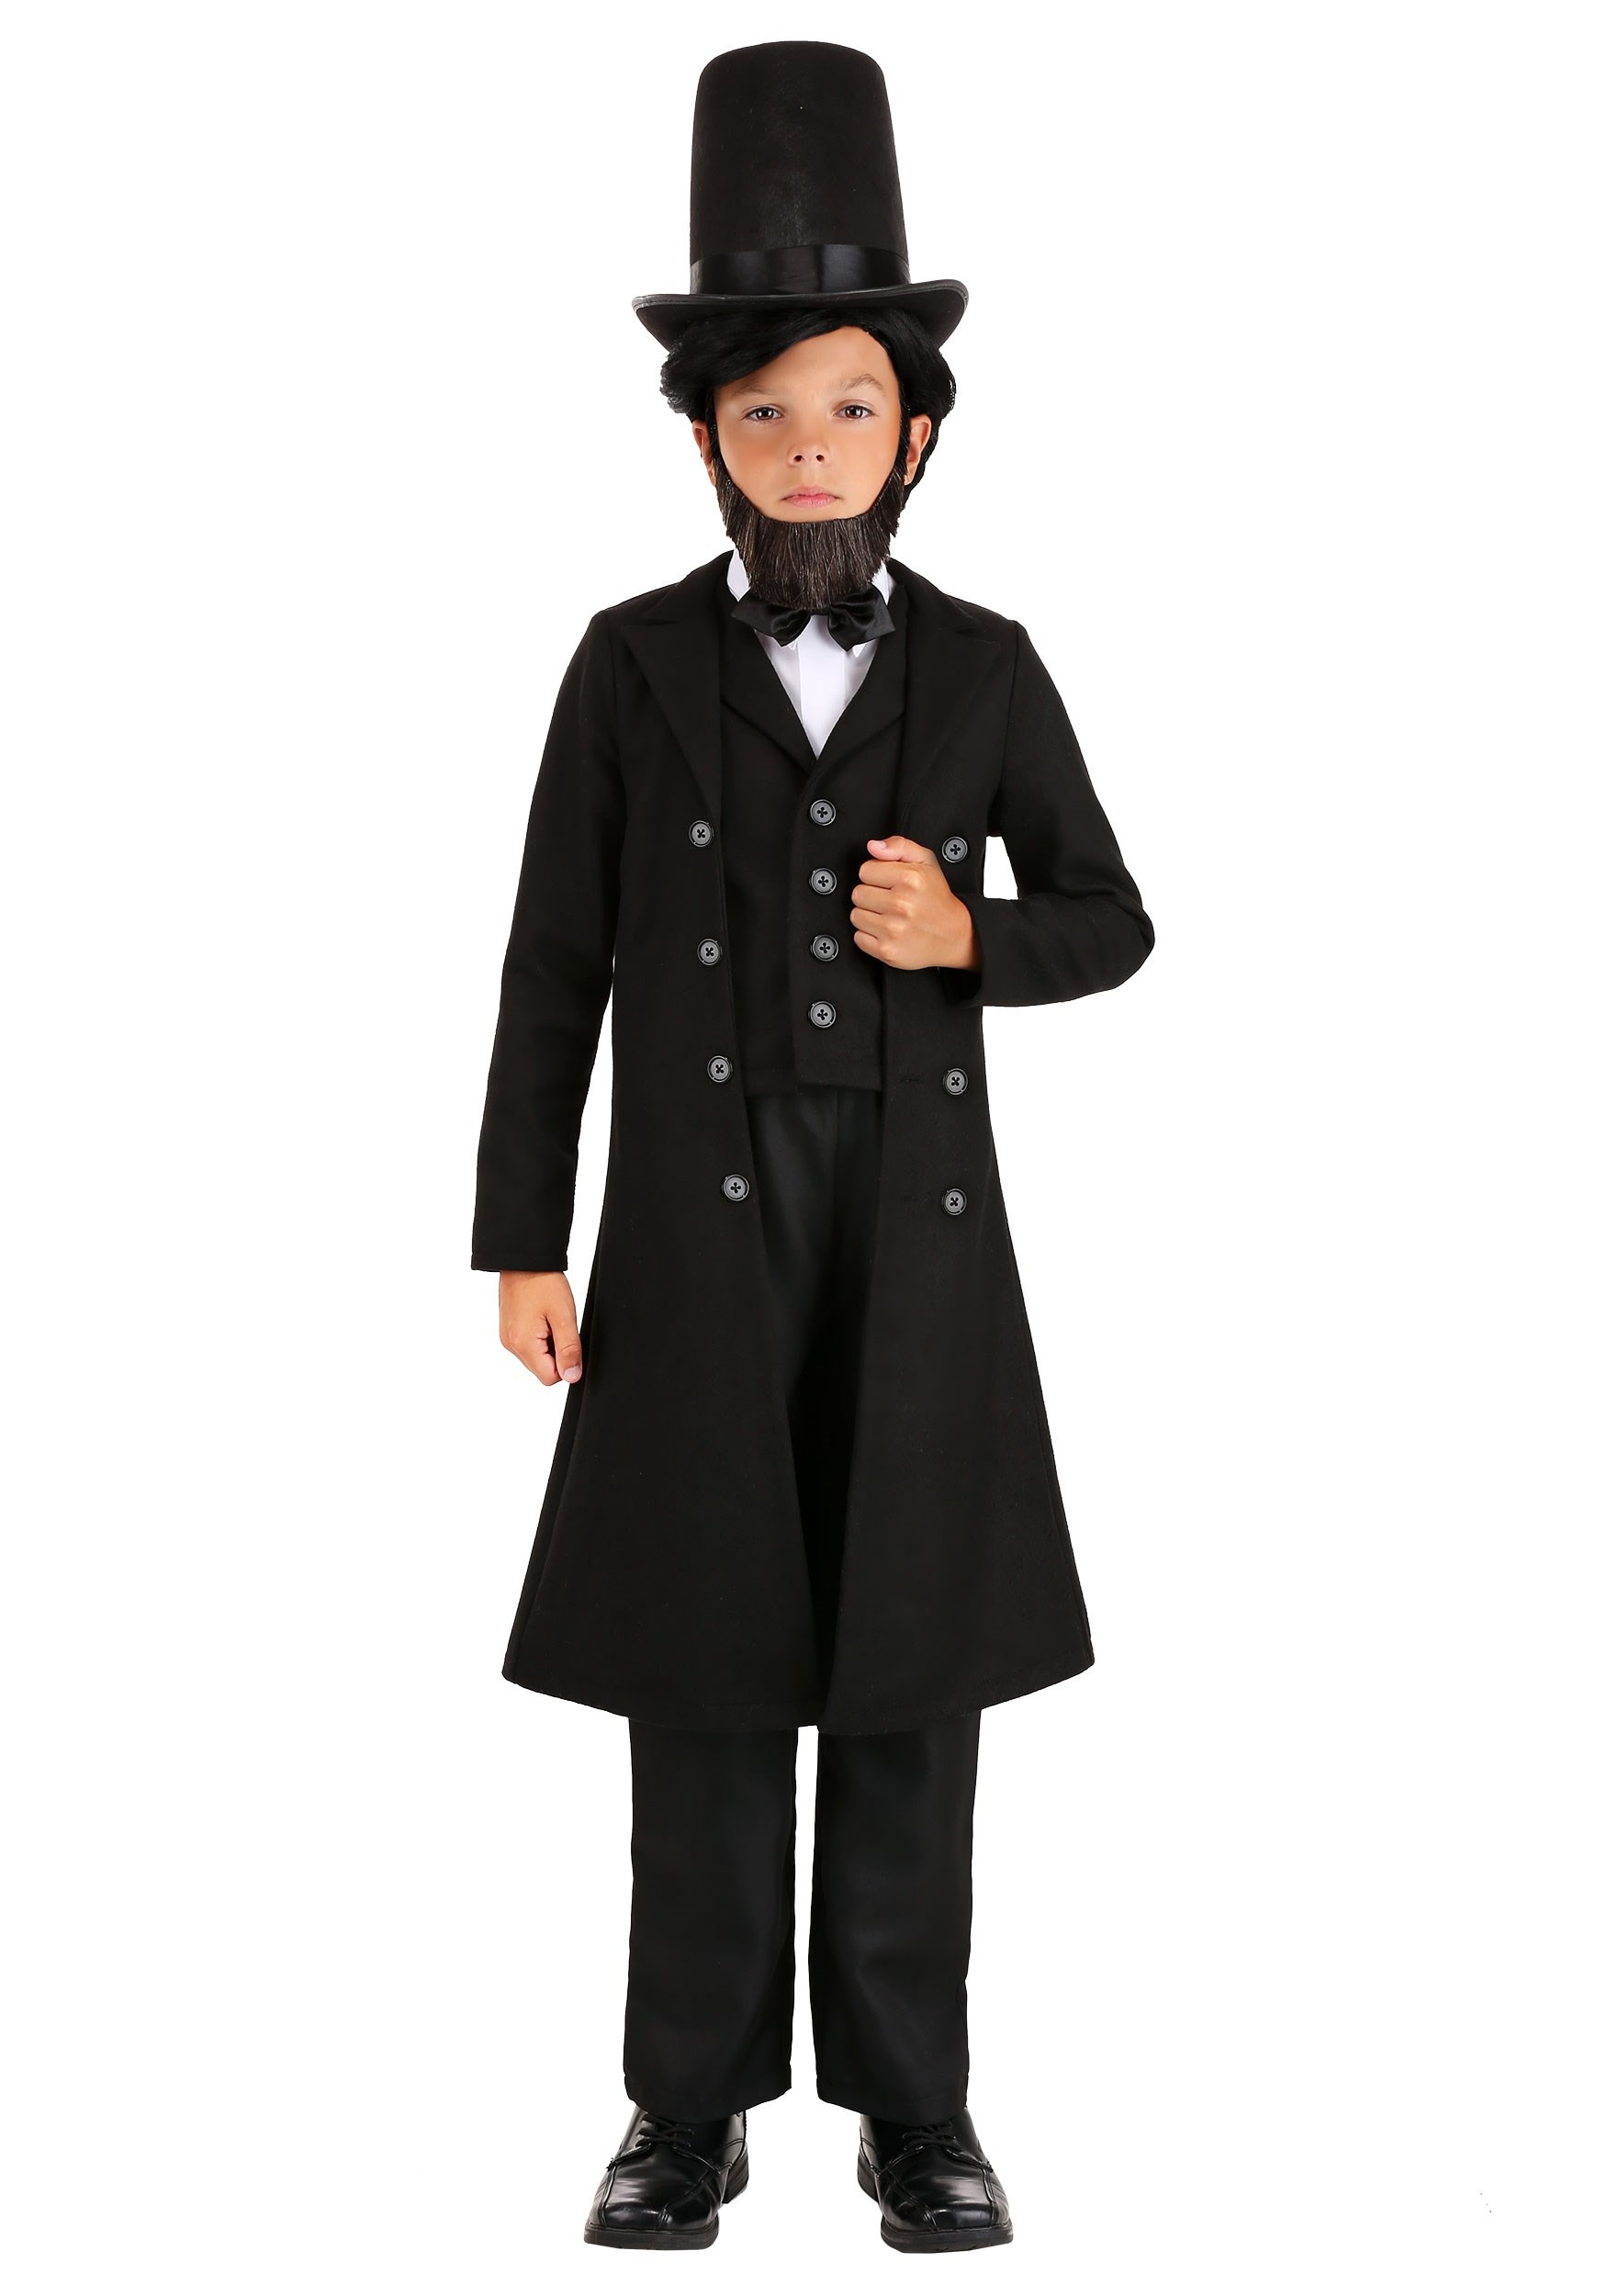 President Lincoln Kid's Costume